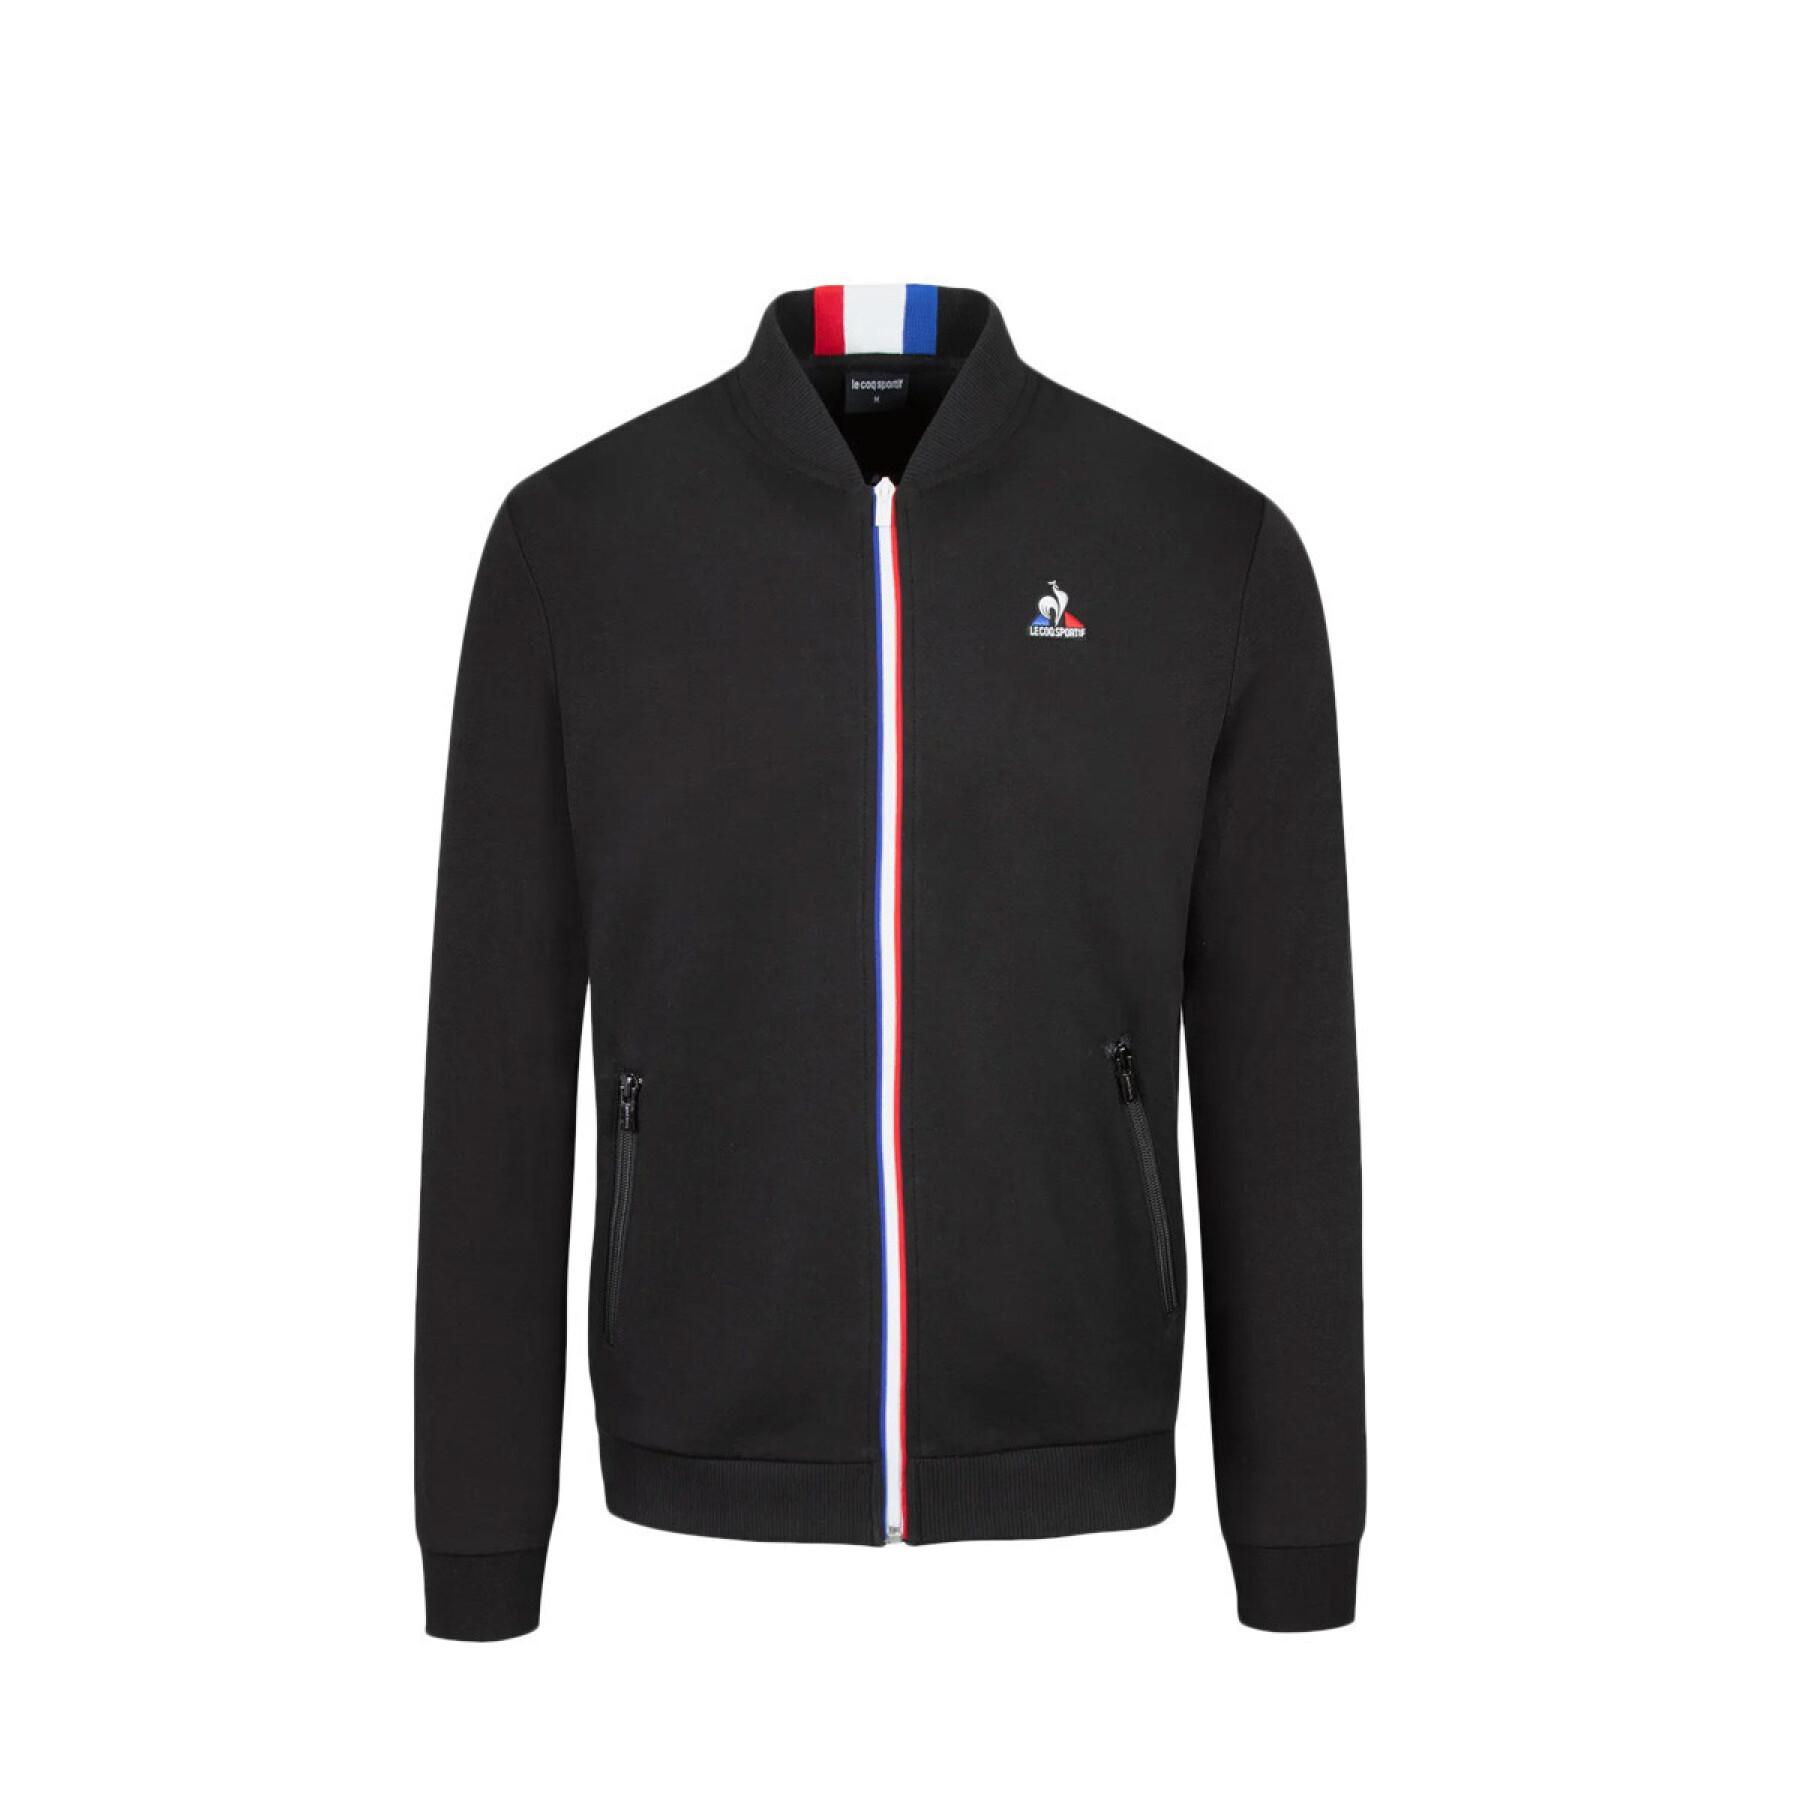 Zip-up sweatshirt Le Coq Sportif Tricolore